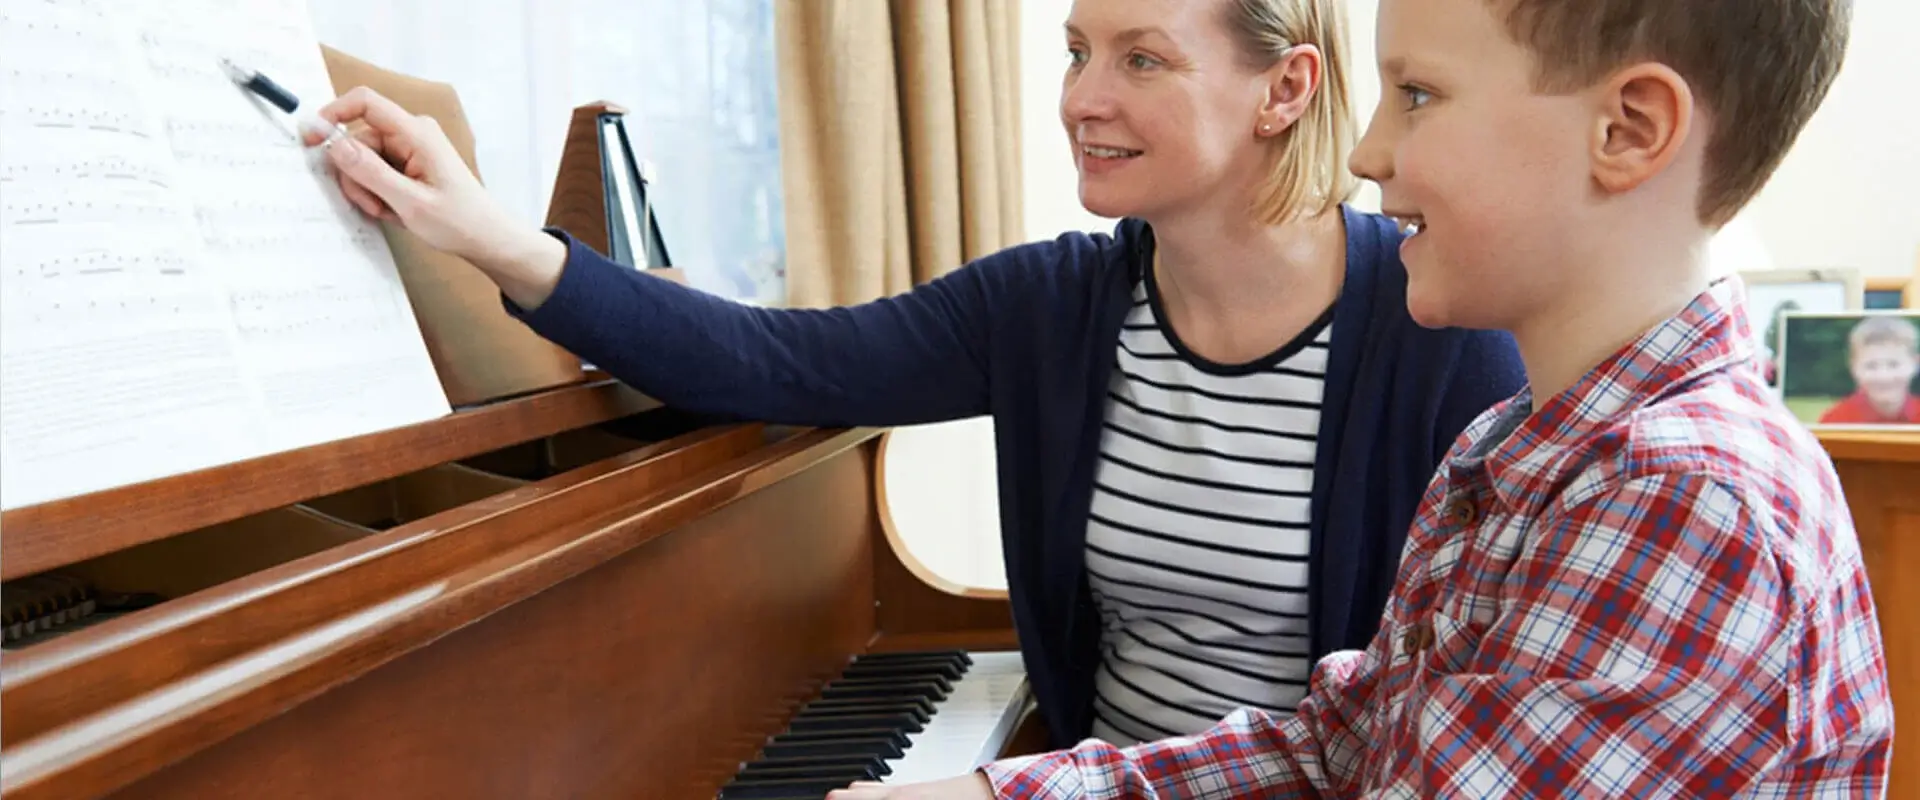 Piano Lessons in Brea CA - Musika Music Teachers